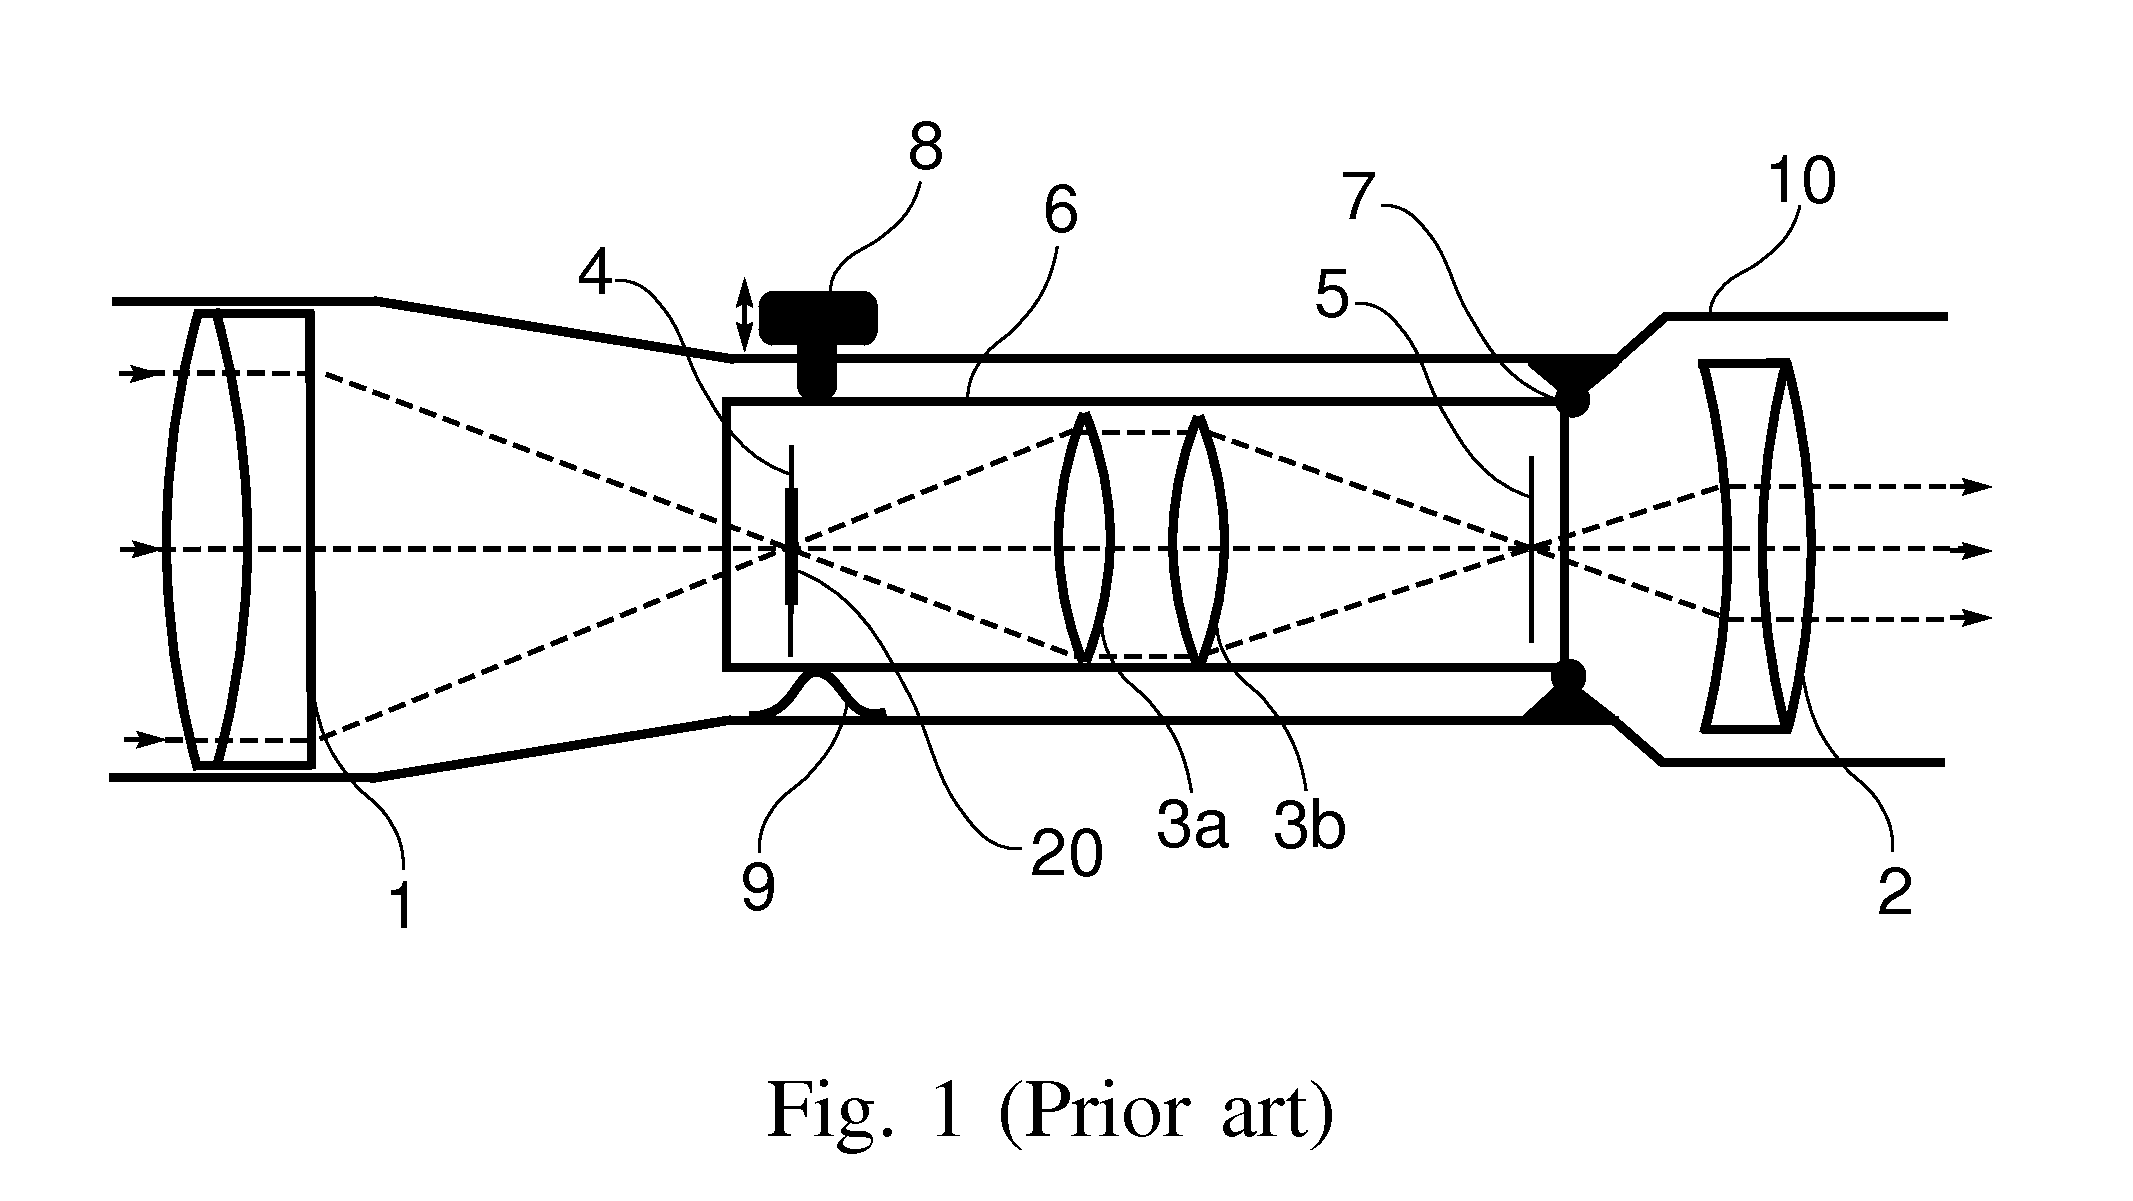 Telescopic gun sight with linear optical adjustment mechanism